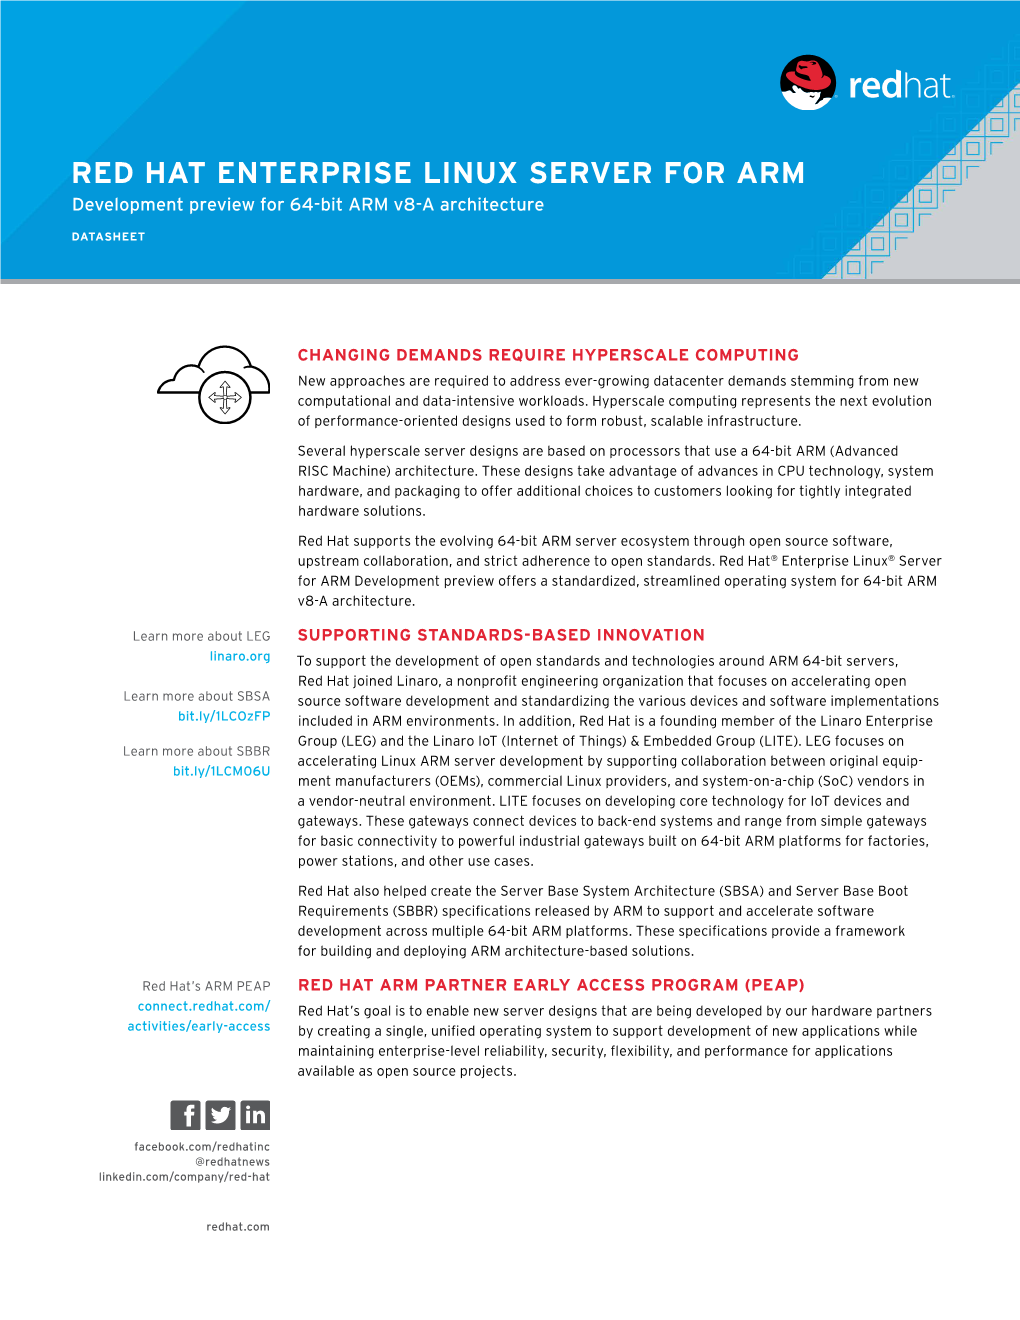 RED HAT ENTERPRISE LINUX SERVER for ARM Development Preview for 64-Bit ARM V8-A Architecture